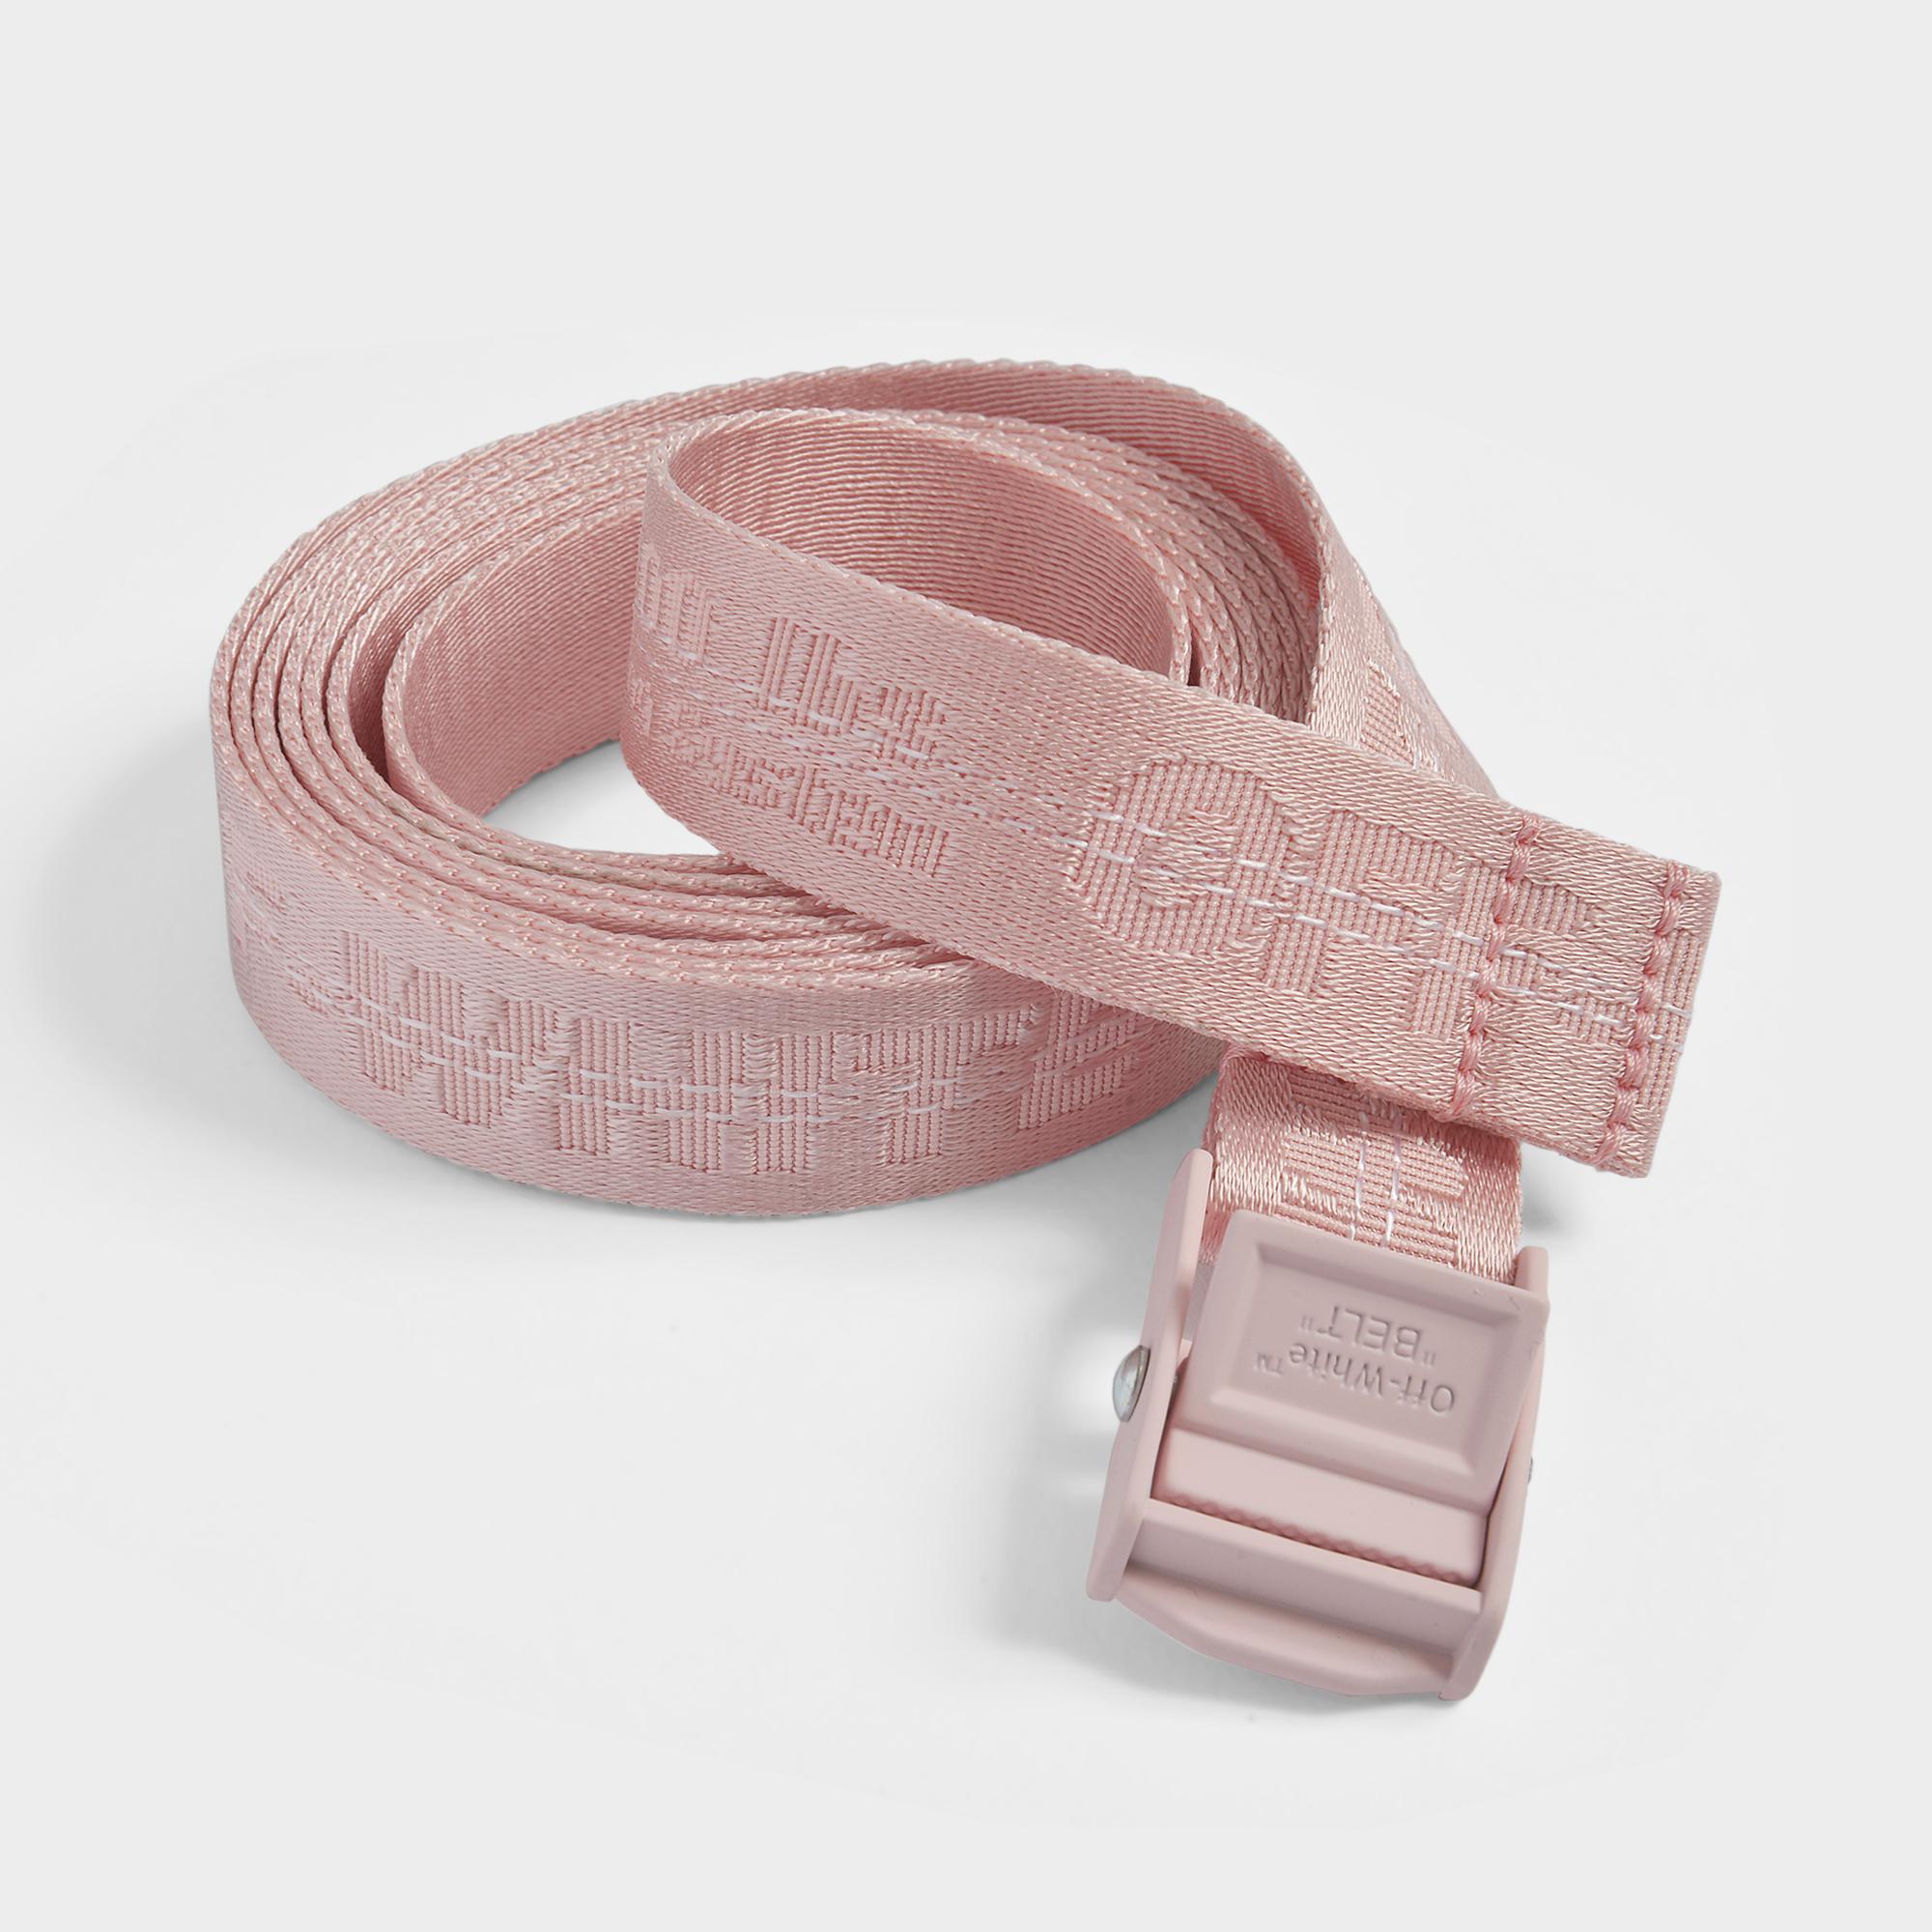 Off-White c/o Virgil Abloh Industrial Mini Belt in Pink | Lyst